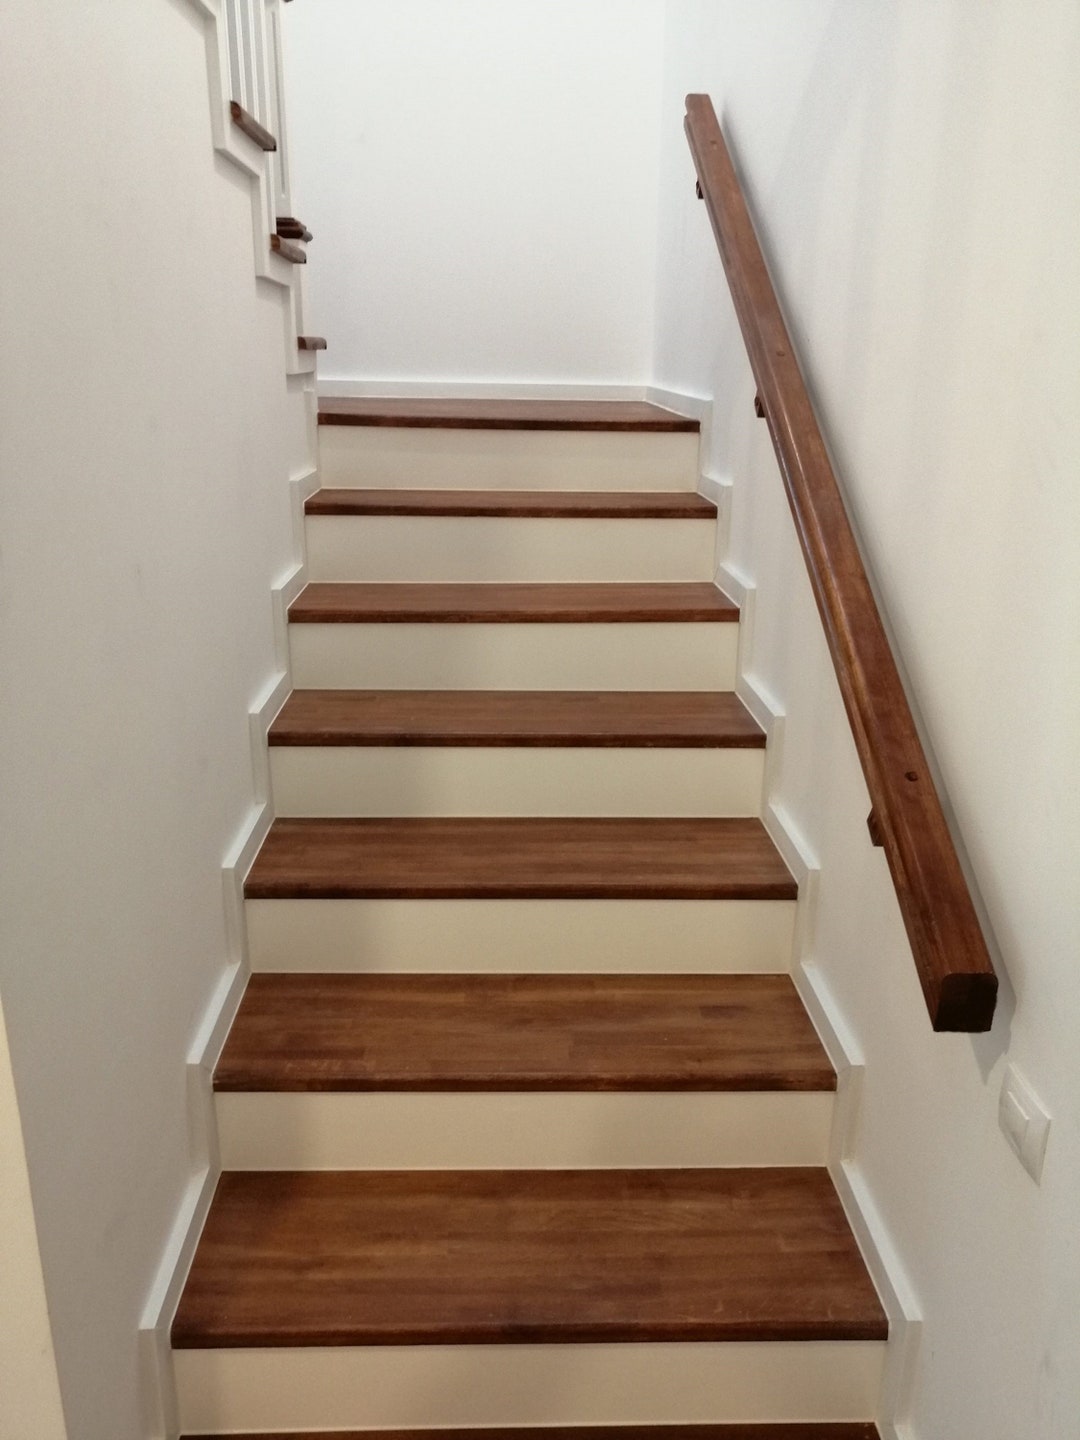 Barandilla de escalera – Pasamanos de montaje en pared – Barandillas de  mano para escaleras interiores, pasamanos de escalera de acrílico